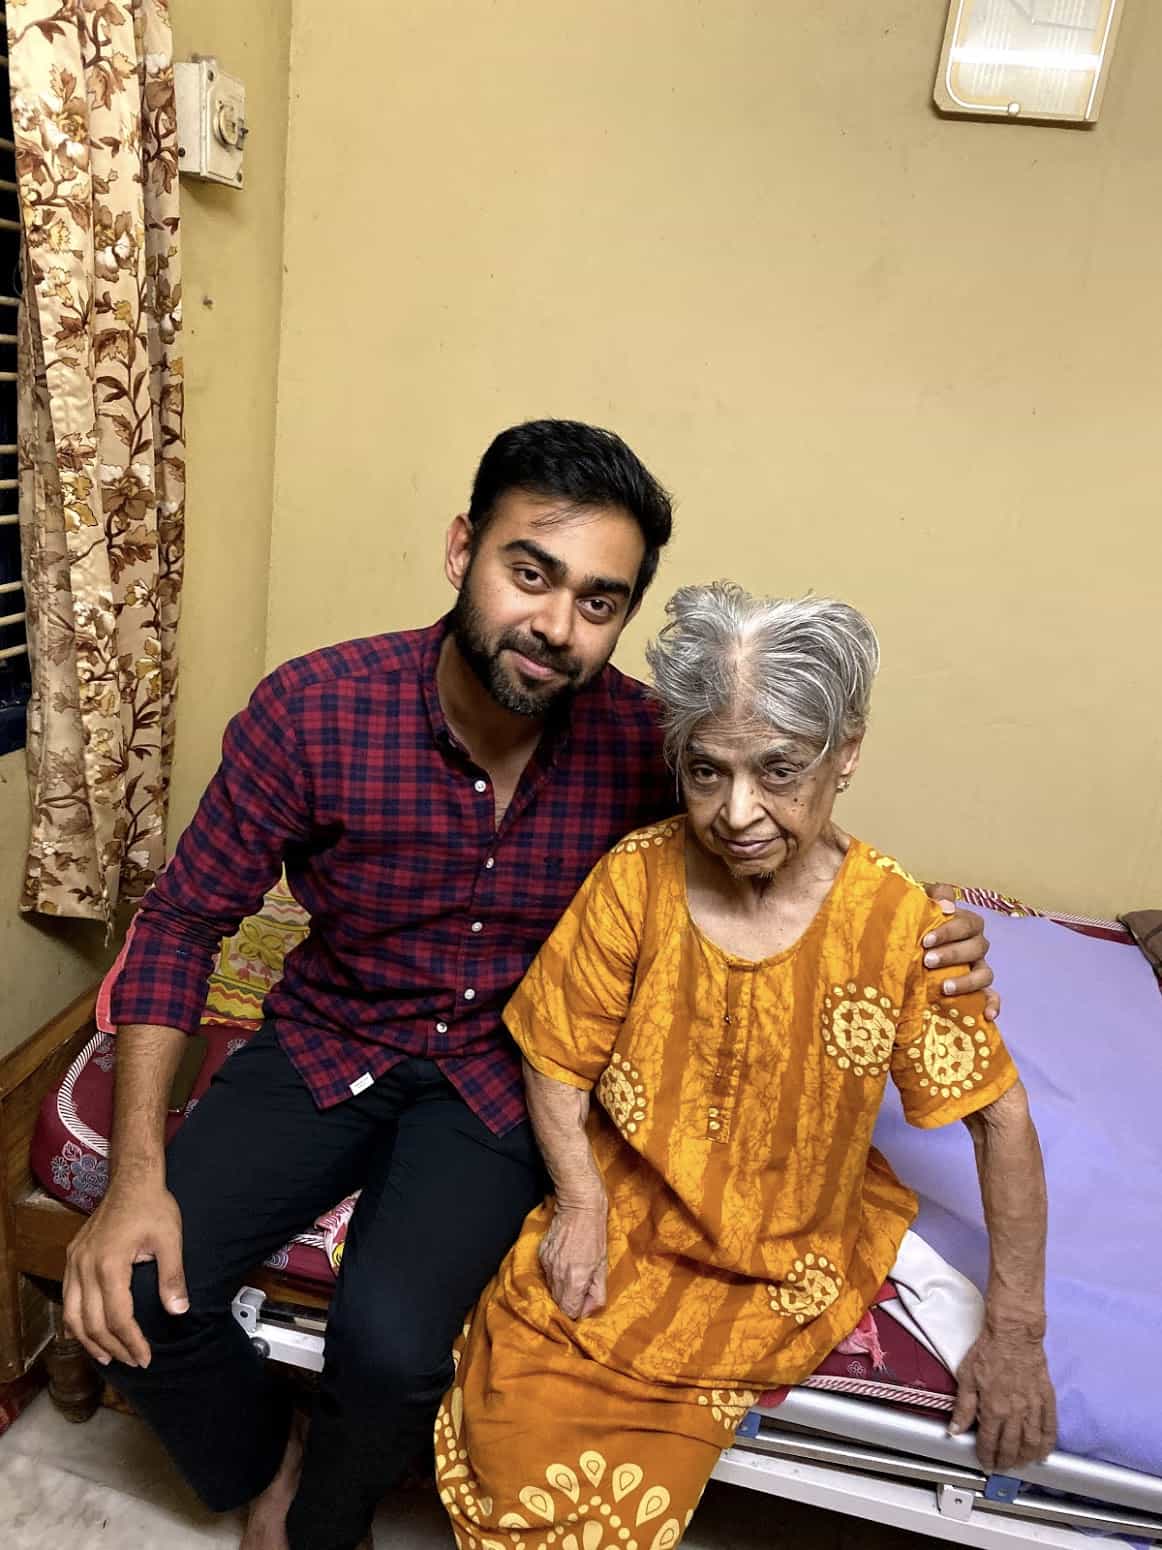 nawaz with his grandmother